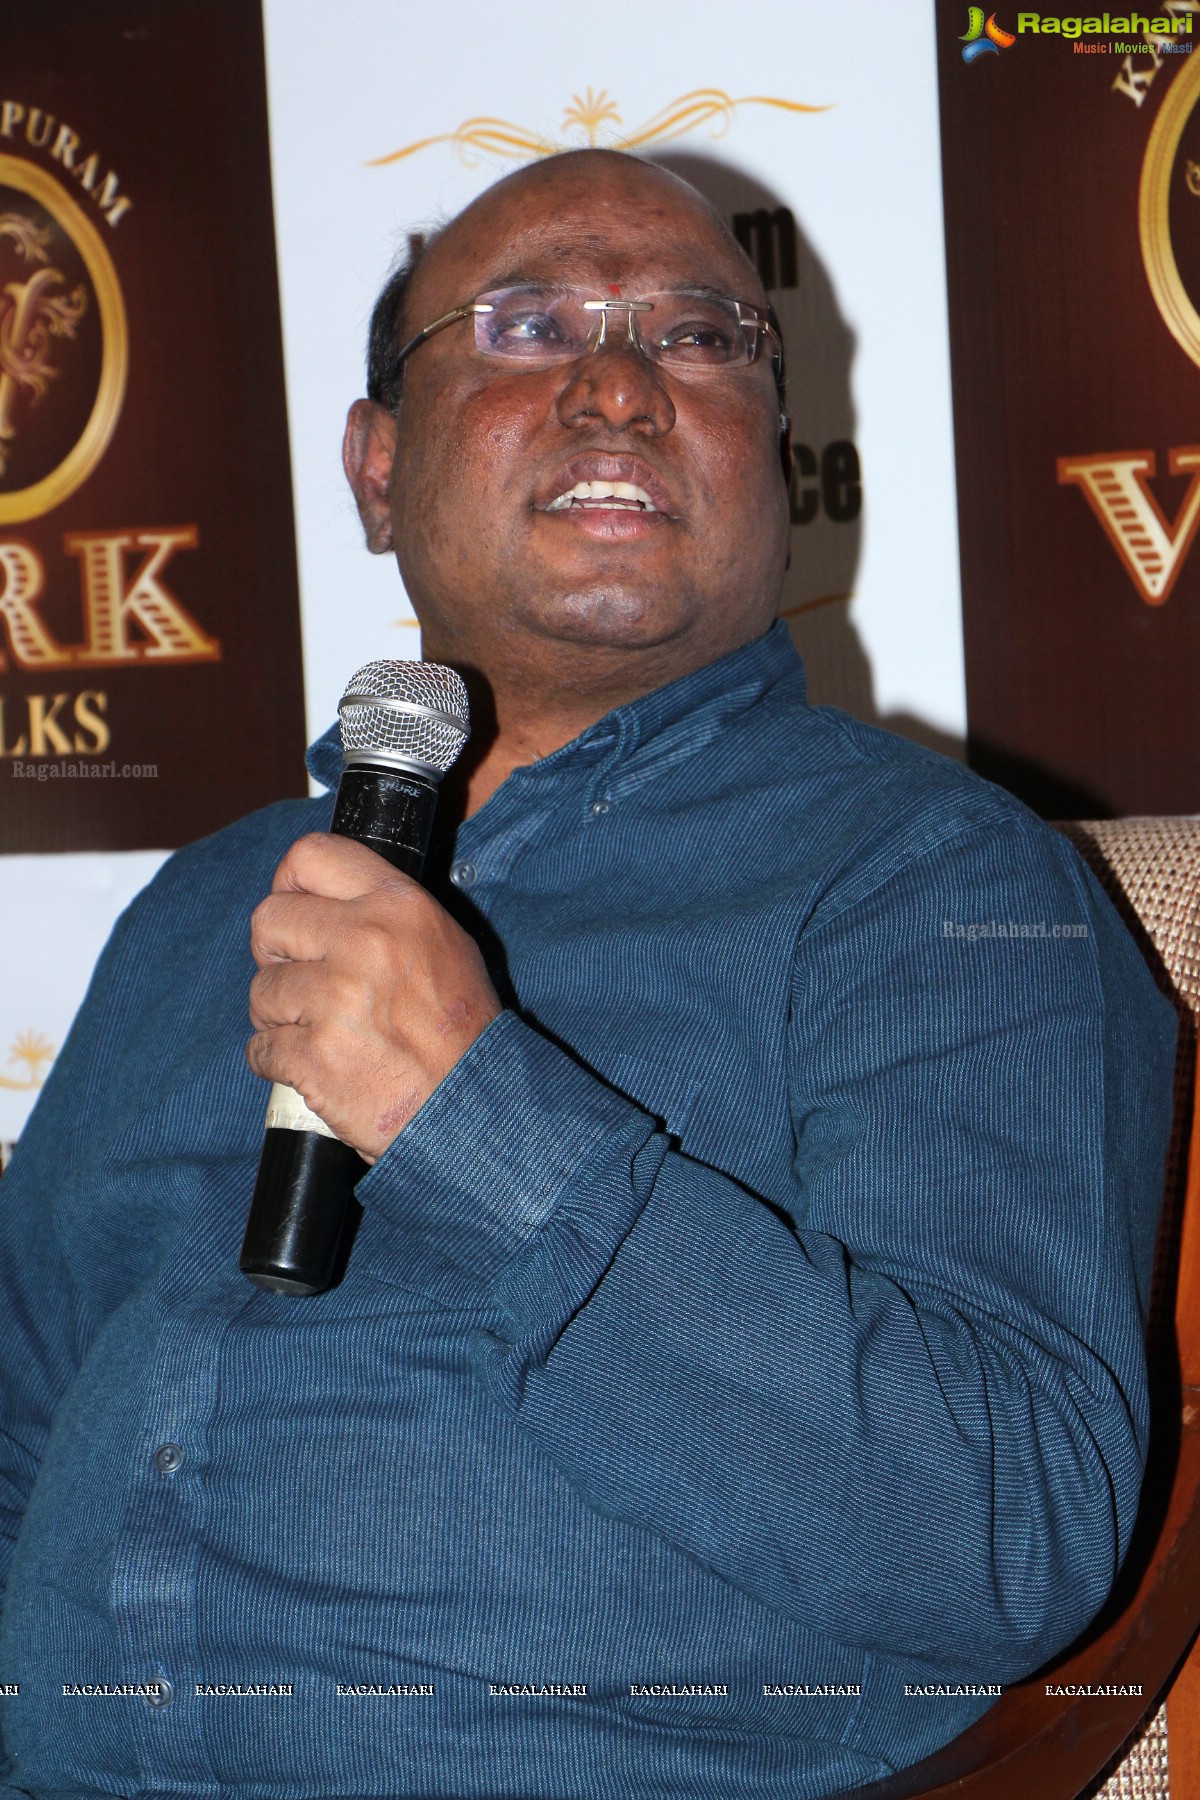 VRK Silks Press Meet with Shriya Saran at Taj Krishna, Hyderabad